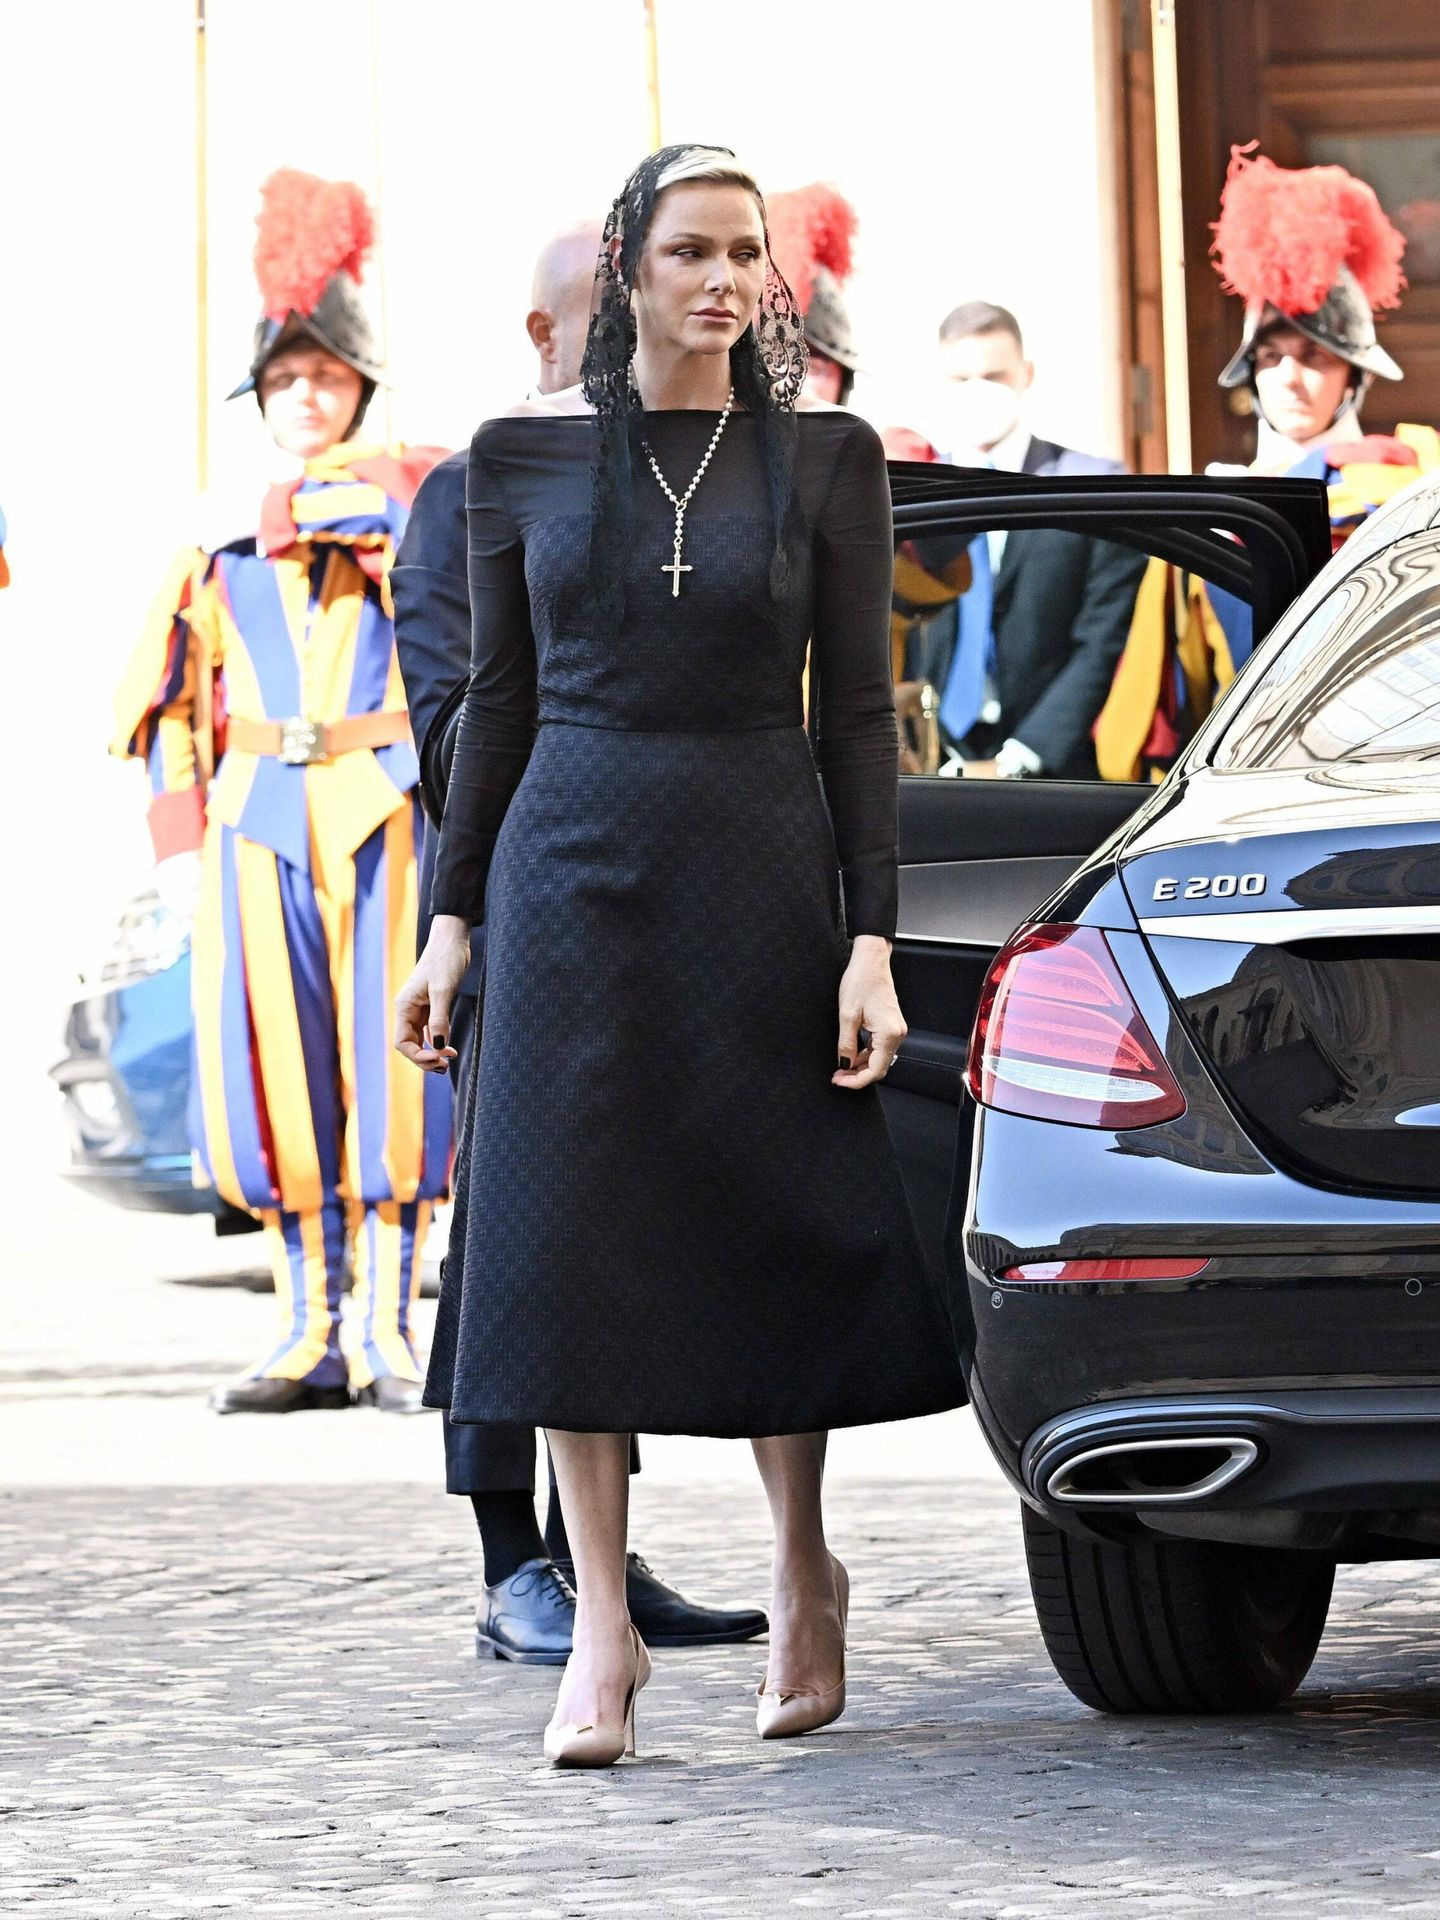 Charlène de Mónaco, en el Vaticano. (Cordon Press)